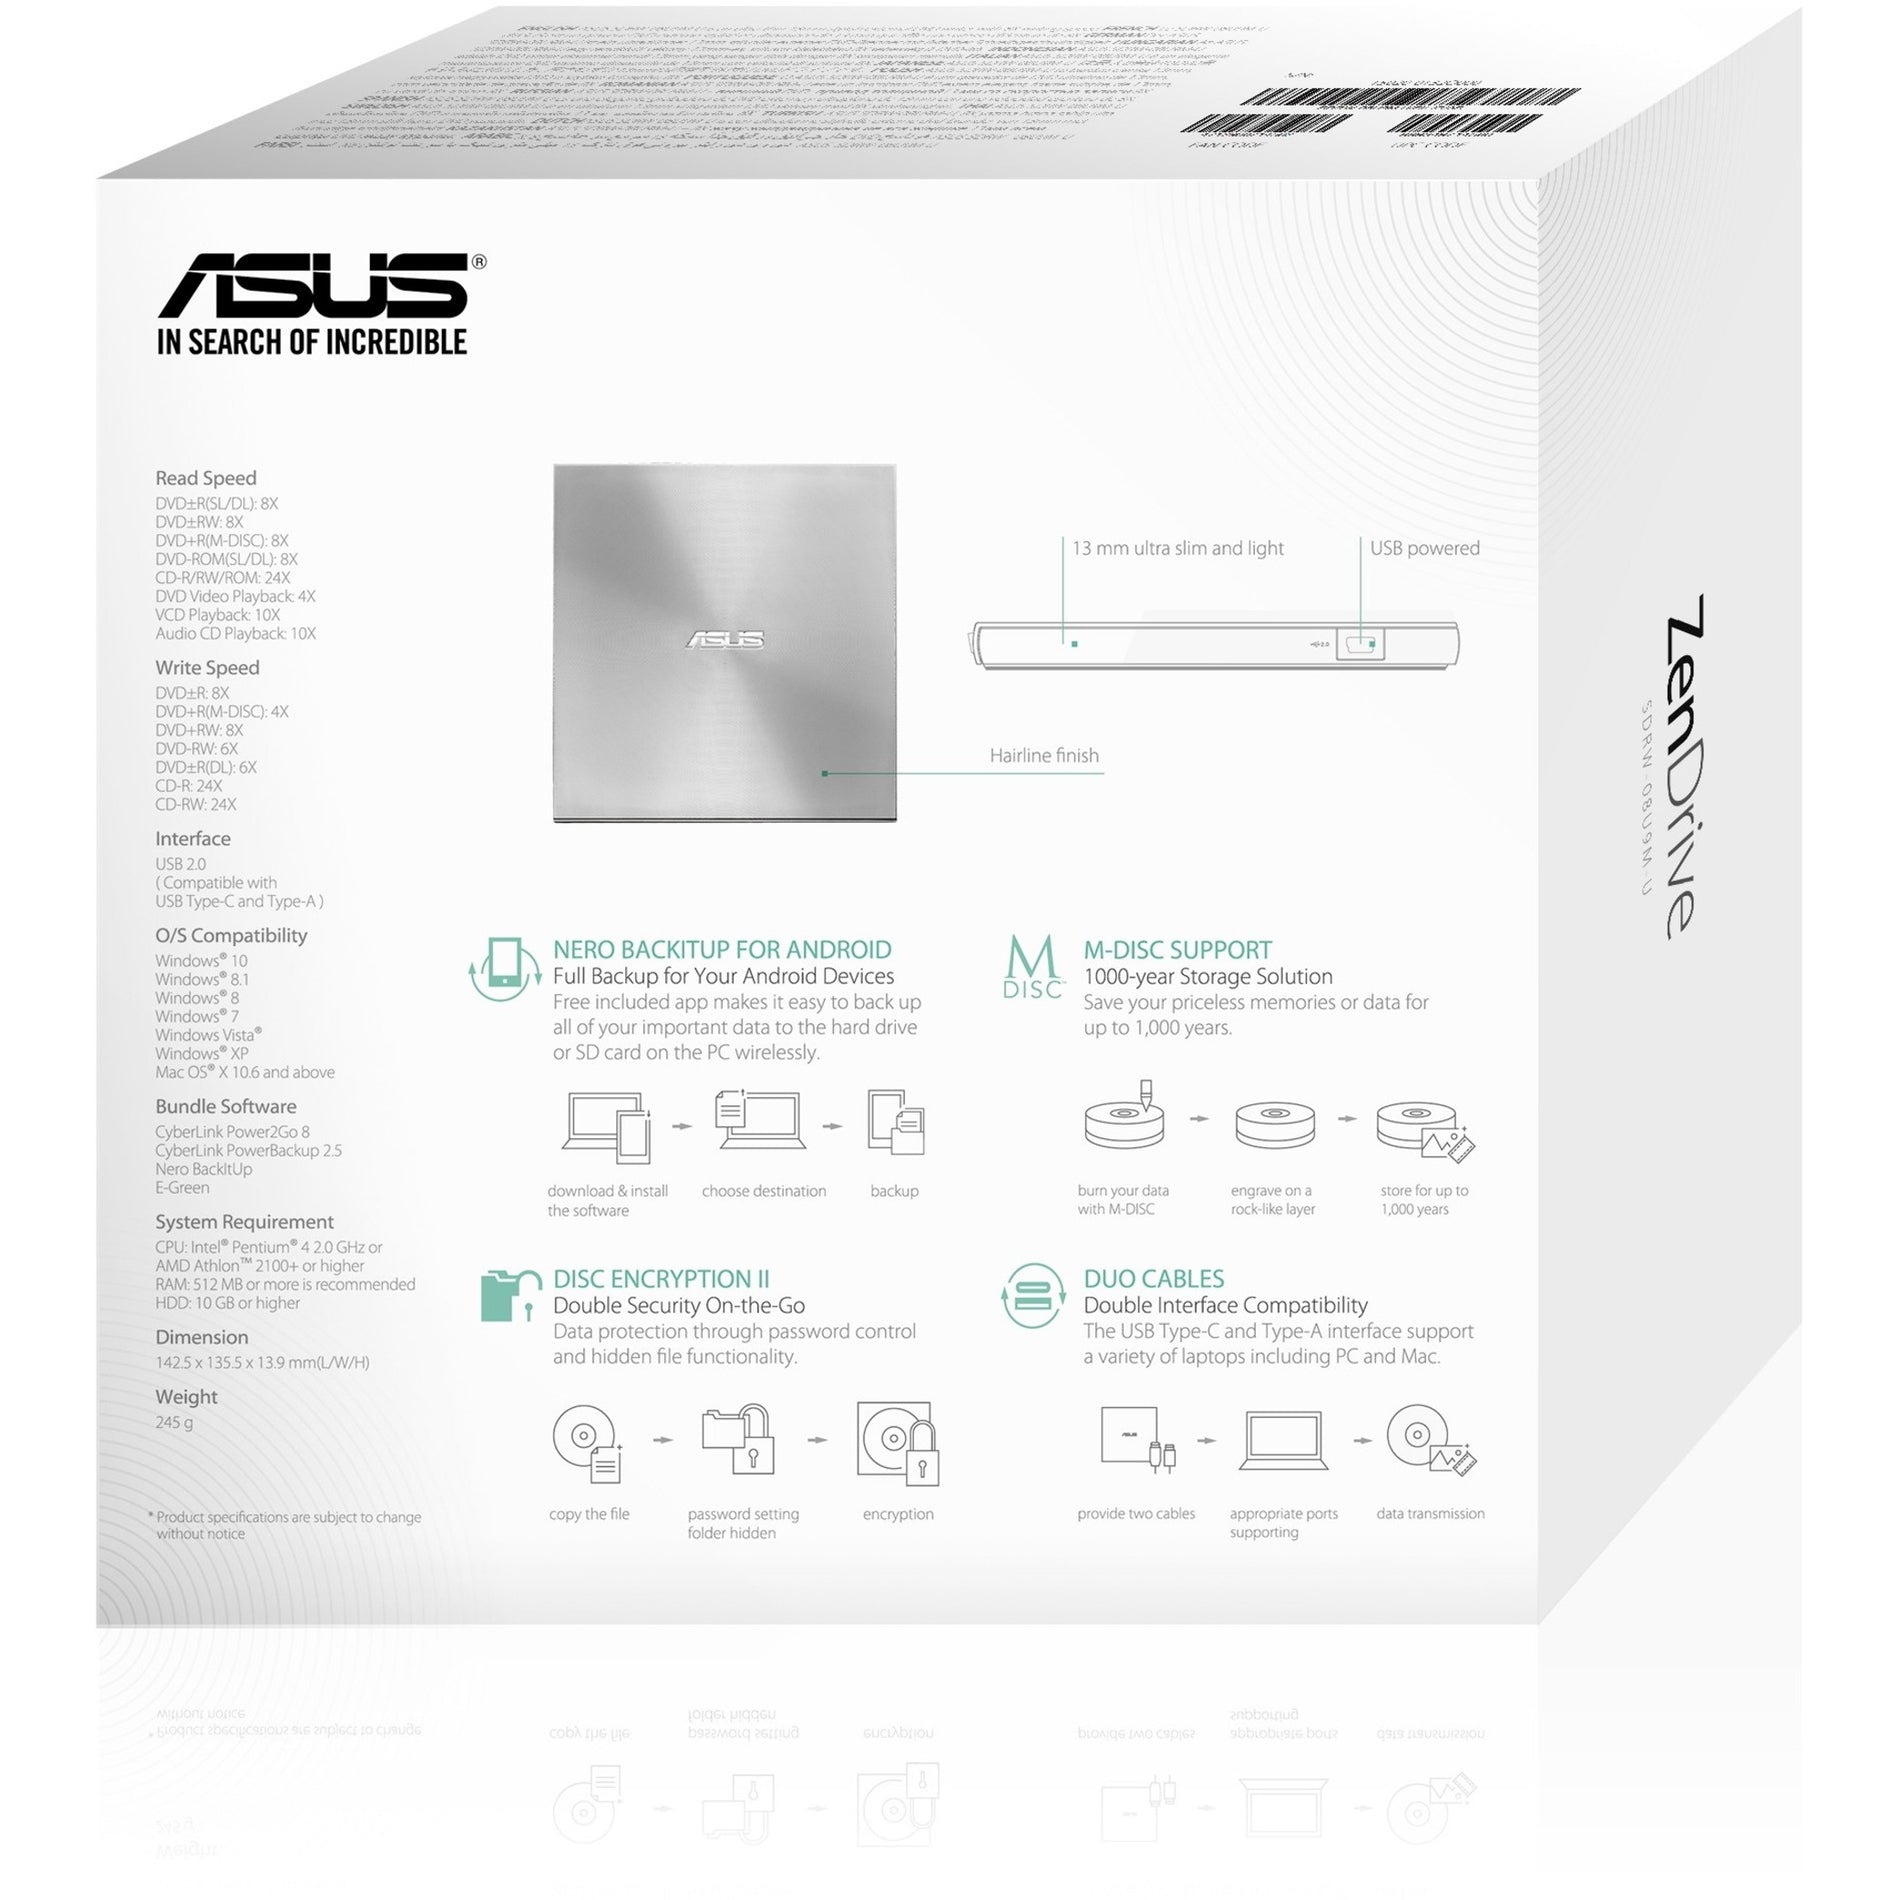 Asus SDRW-08U9M-U/SIL ZenDrive U9M DVD Writer, USB 2.0 & Type-C for Mac/PC